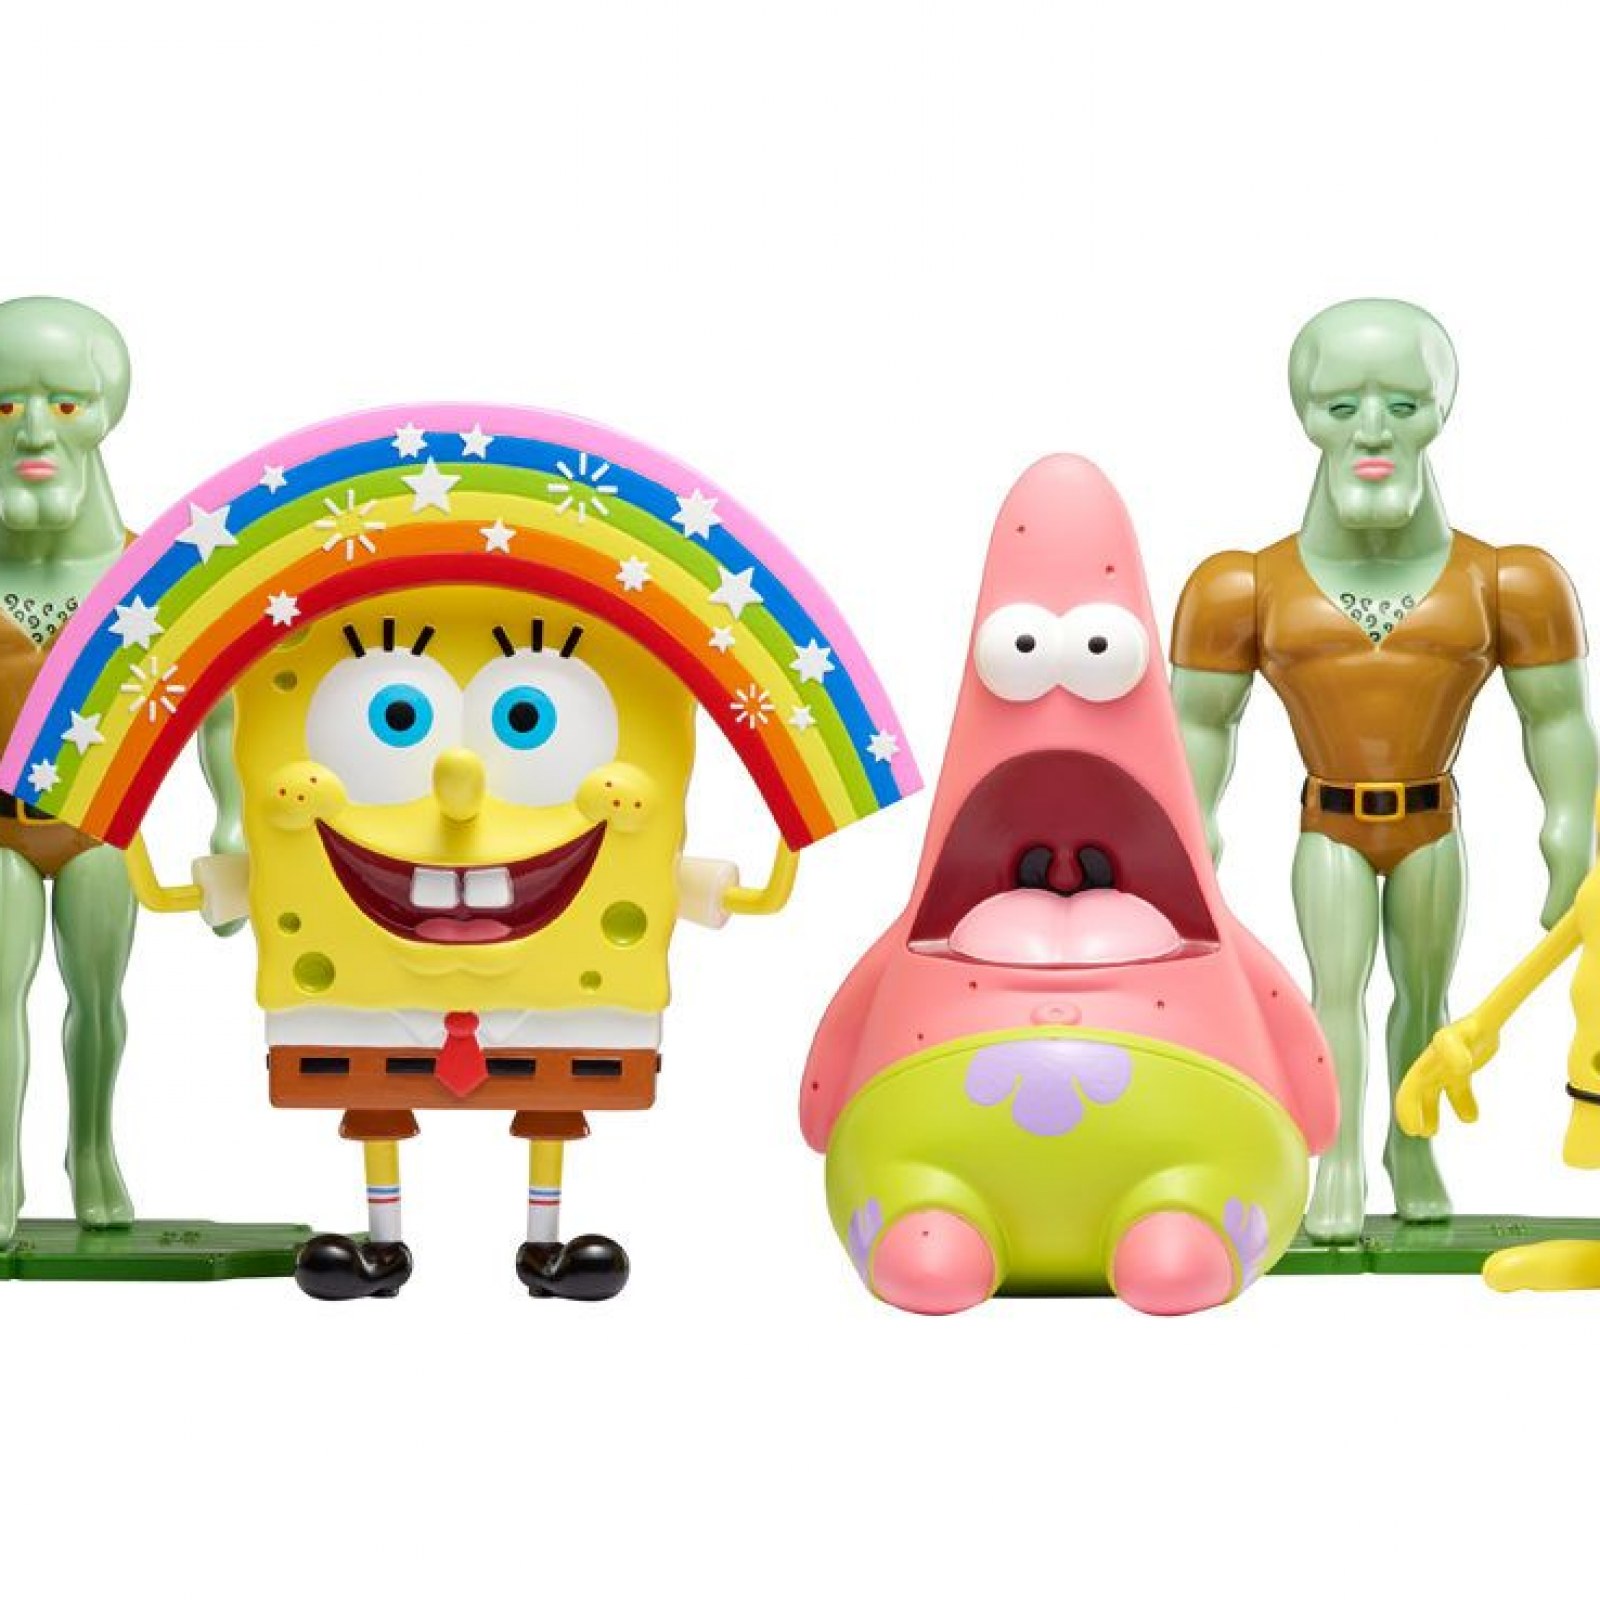 New Spongebob Meme Toys Bring Mocking Spongebob Spongegar And